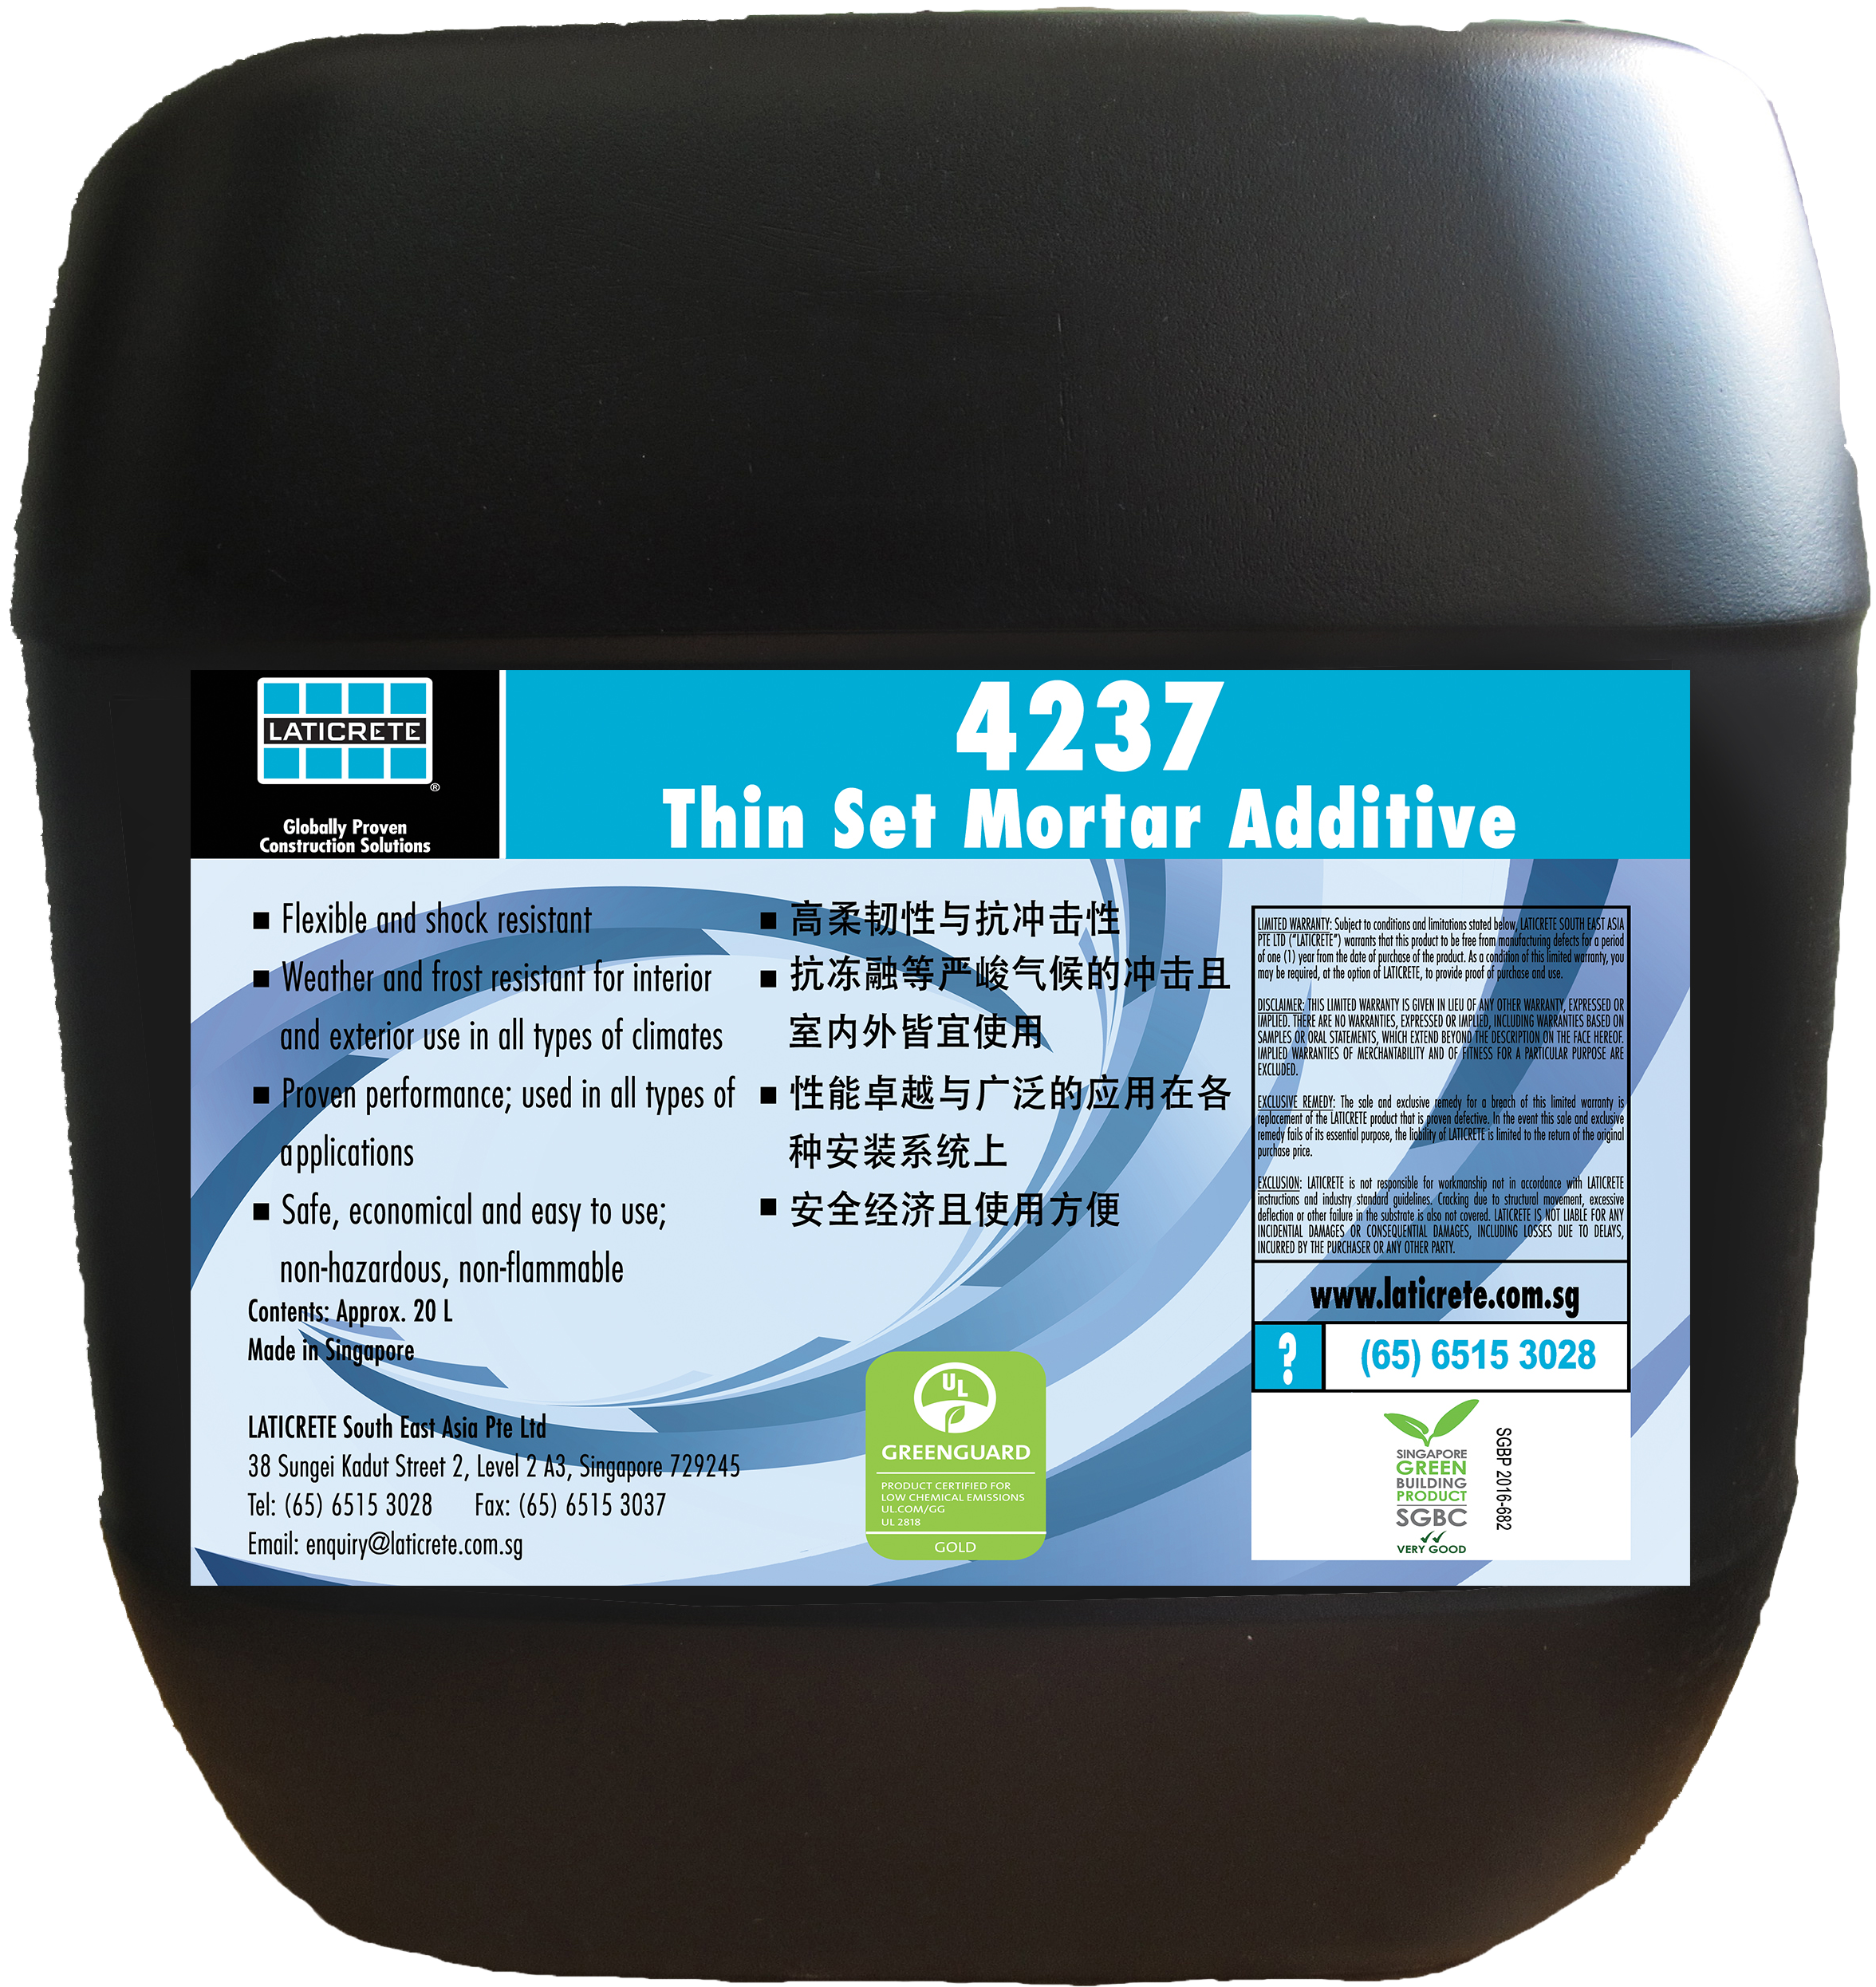 4237 Thin Set Mortar Additive